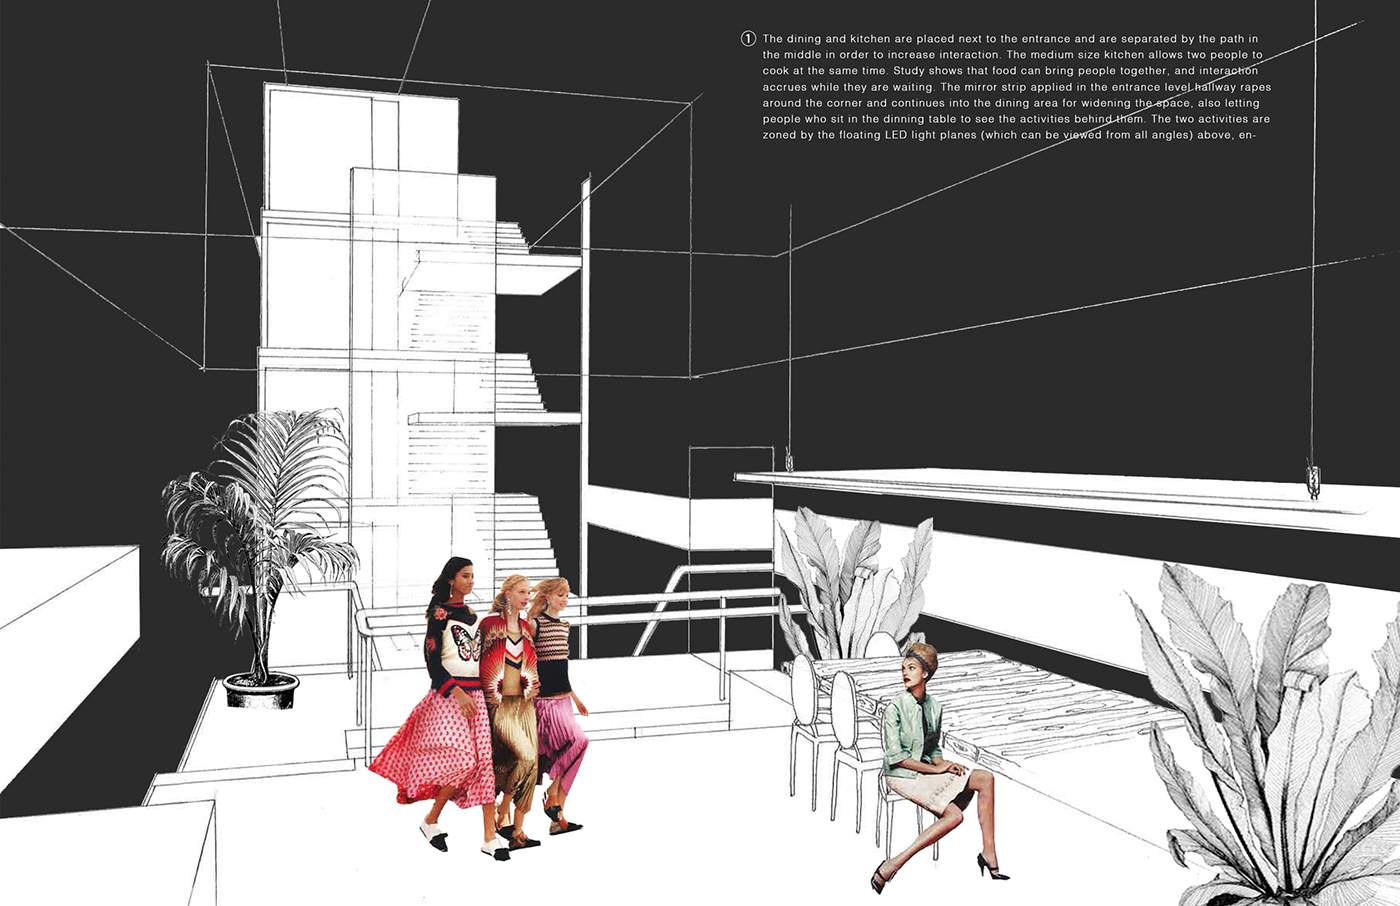 alley design Interior Architecture student project chicago granham foundation adaptive reuse